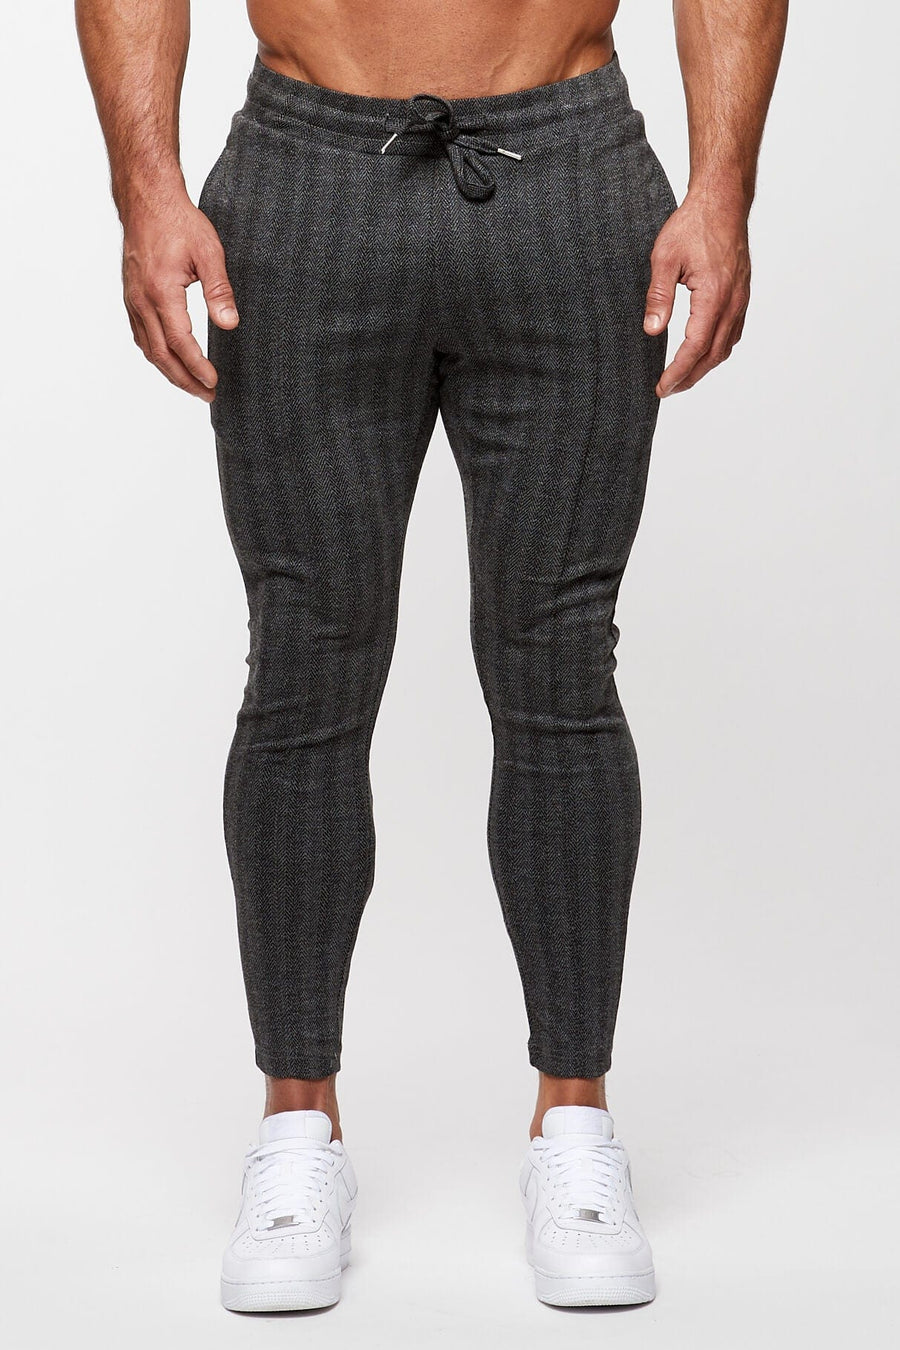 Legend London Trousers SMART JOGGER PANT – CHARCOAL